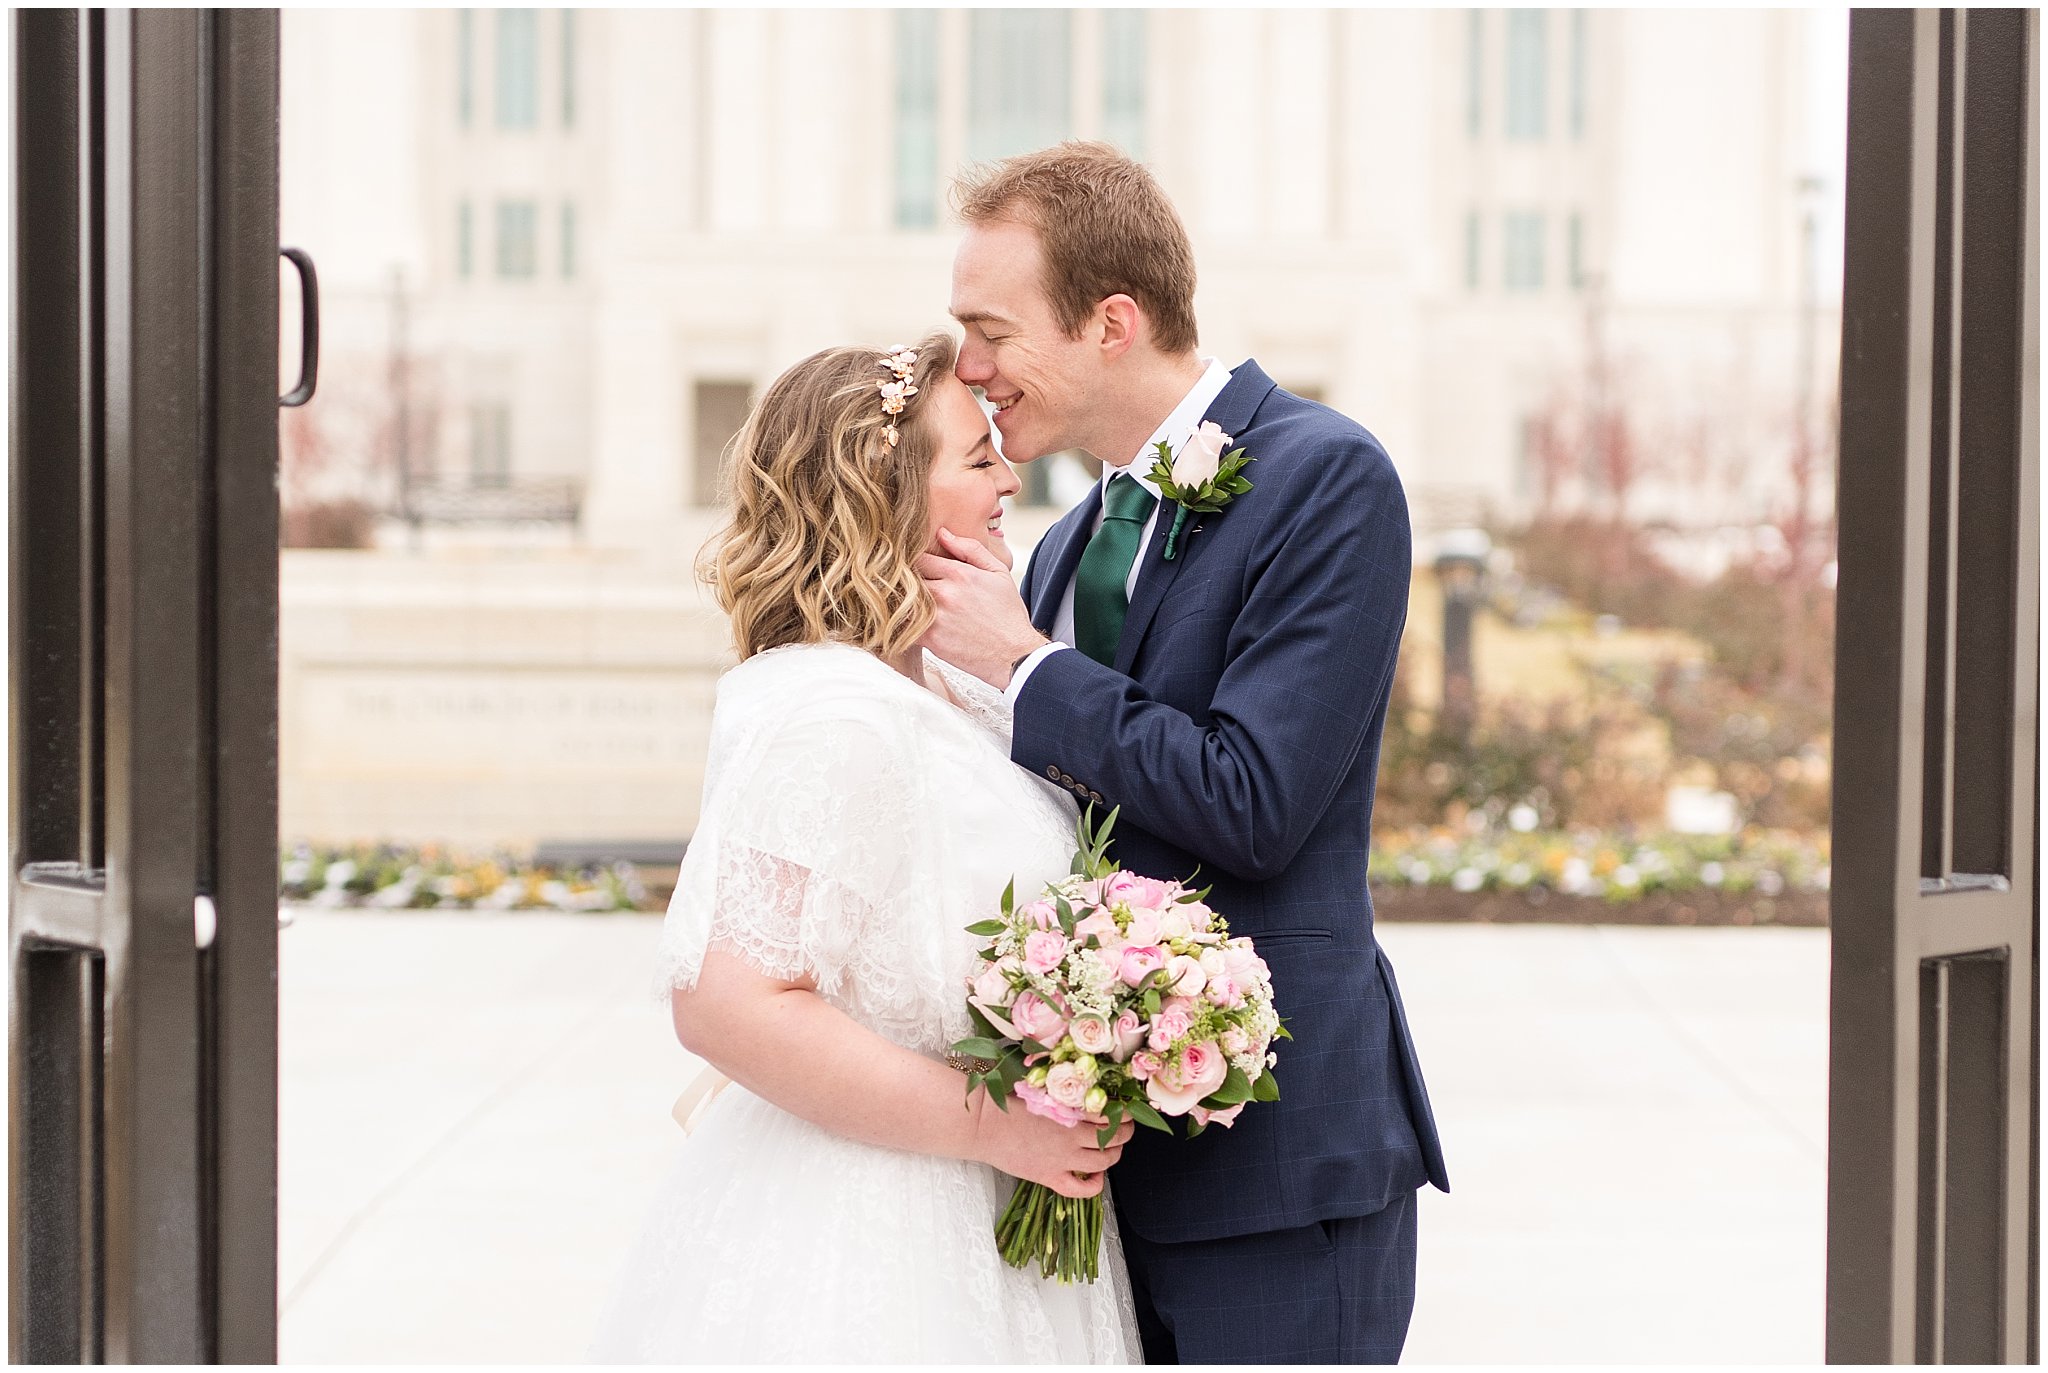 Ogden Temple Wedding | Ogden Utah wedding | Groom kisses bride on the forehead | Jessie and Dallin Photography